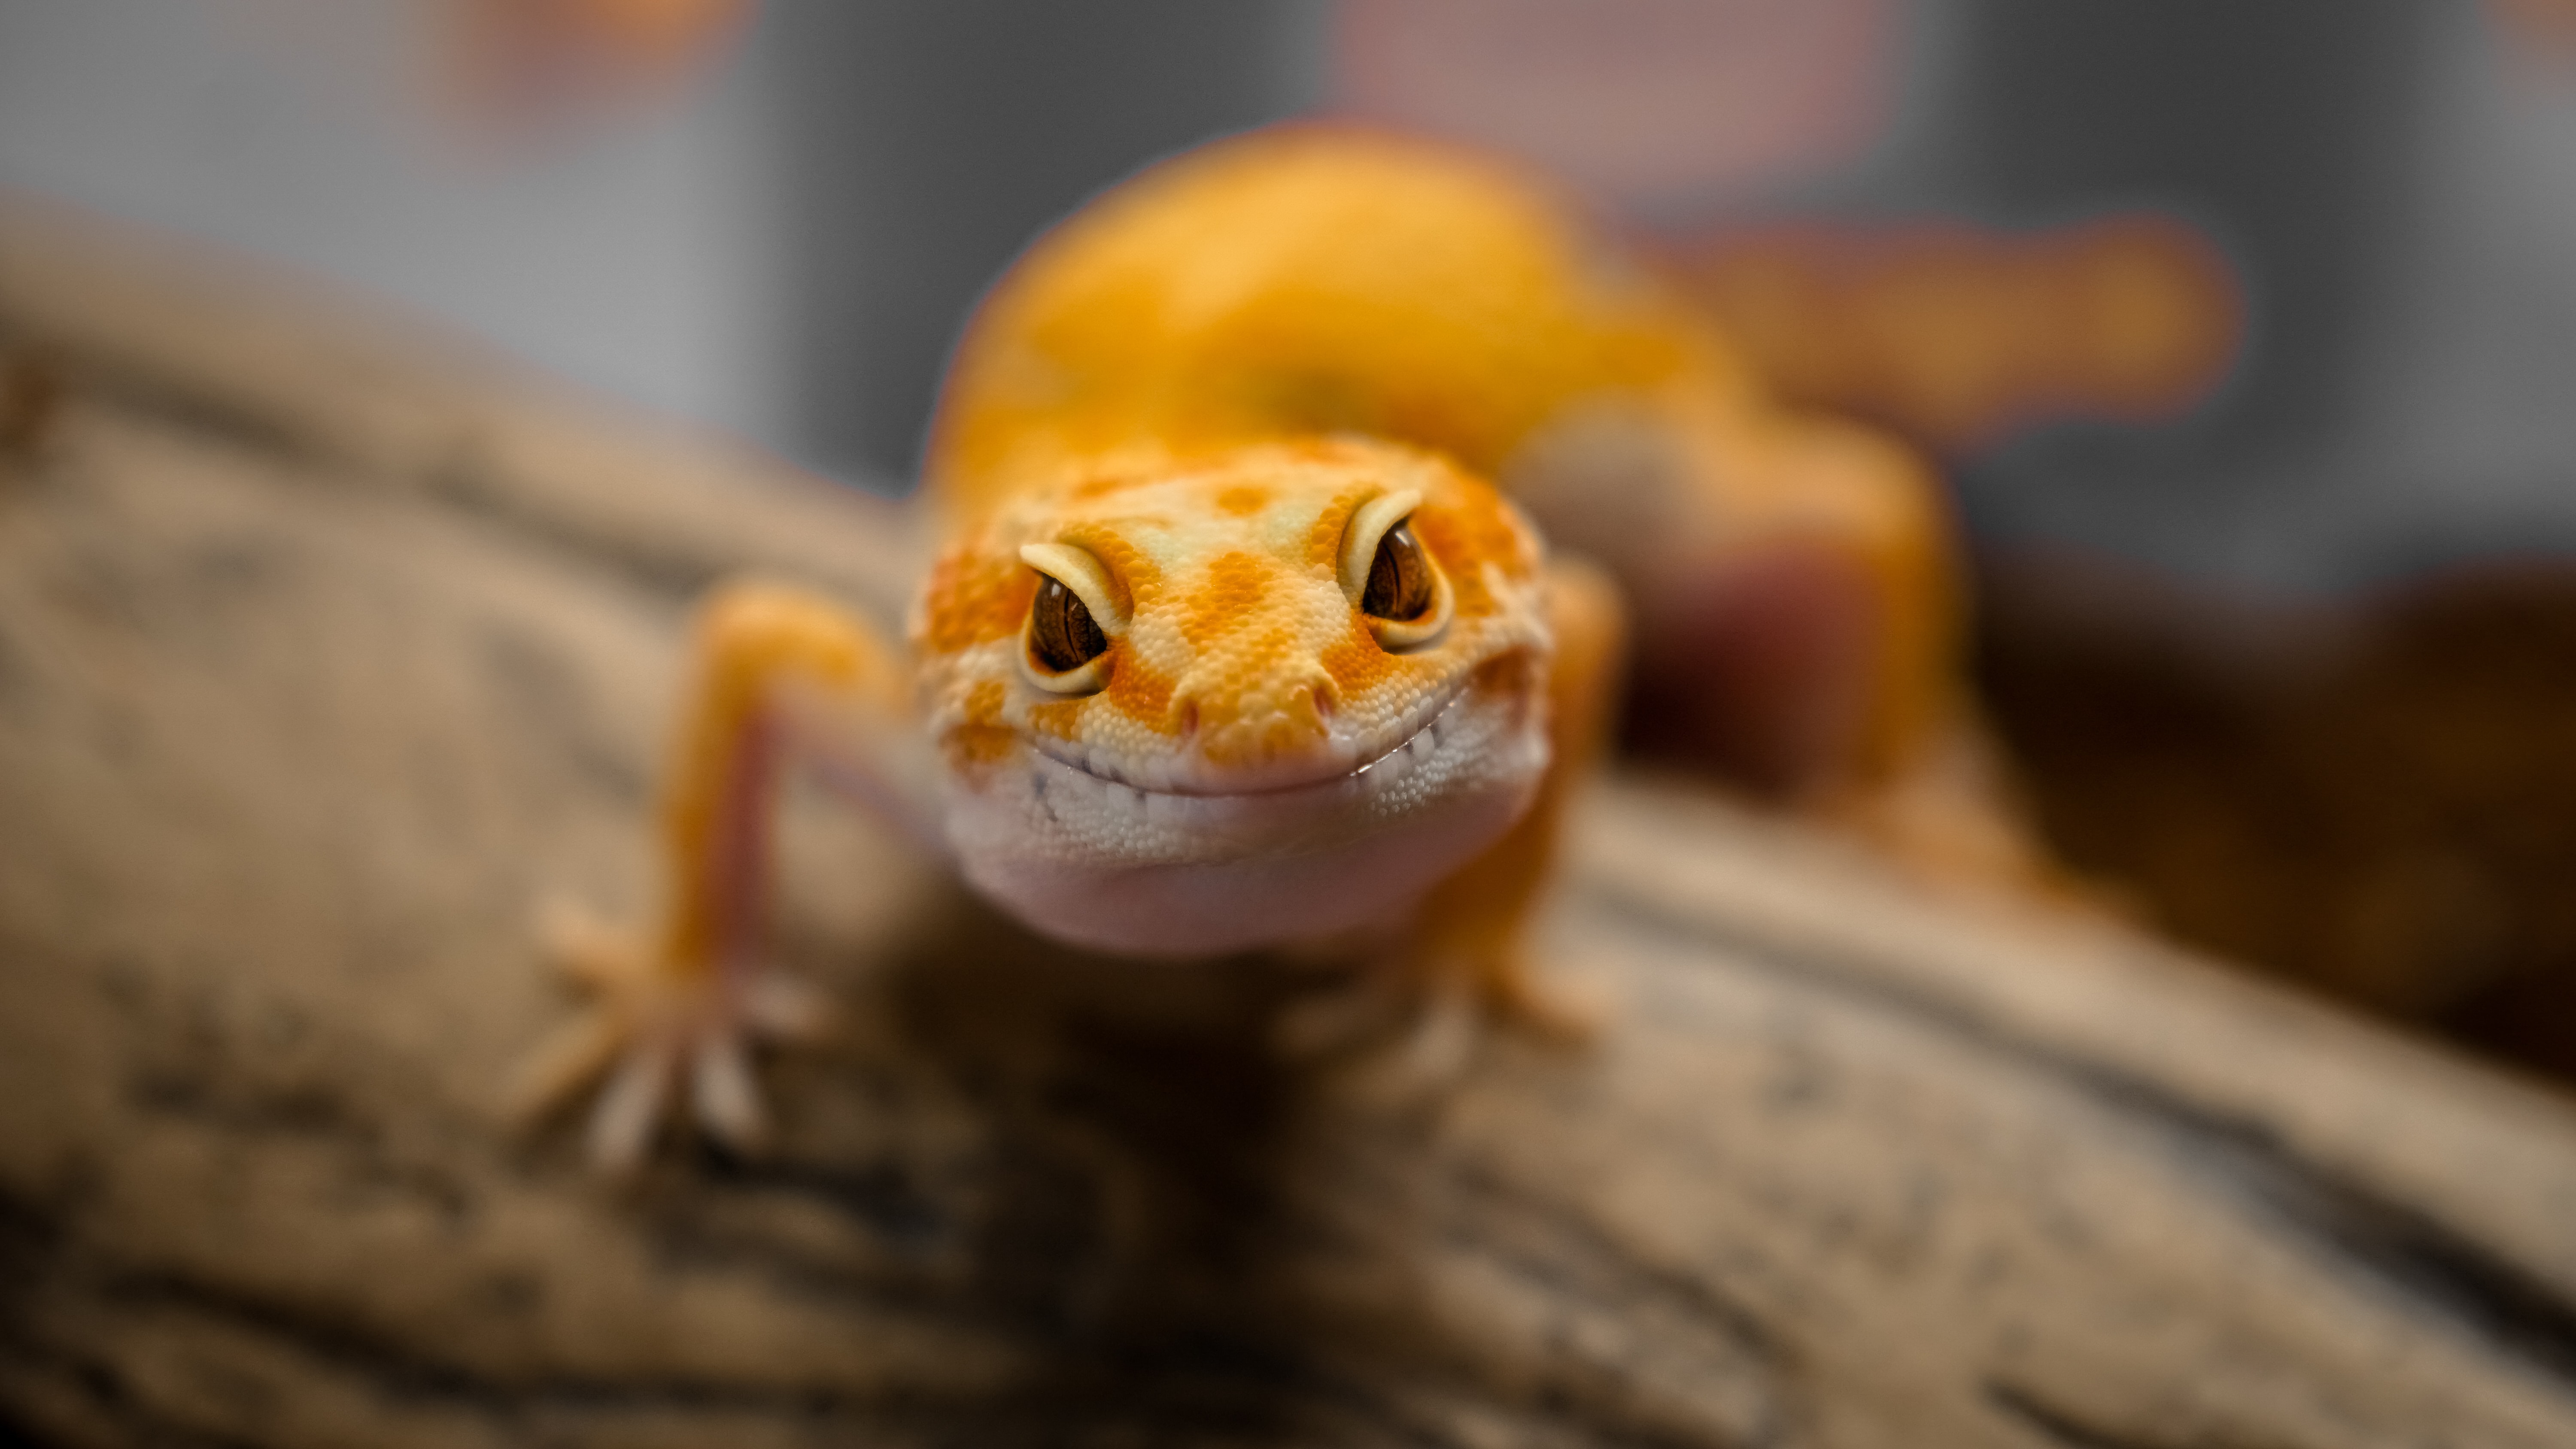 A curious gecko. Photo by Verdian Chua via Unsplash